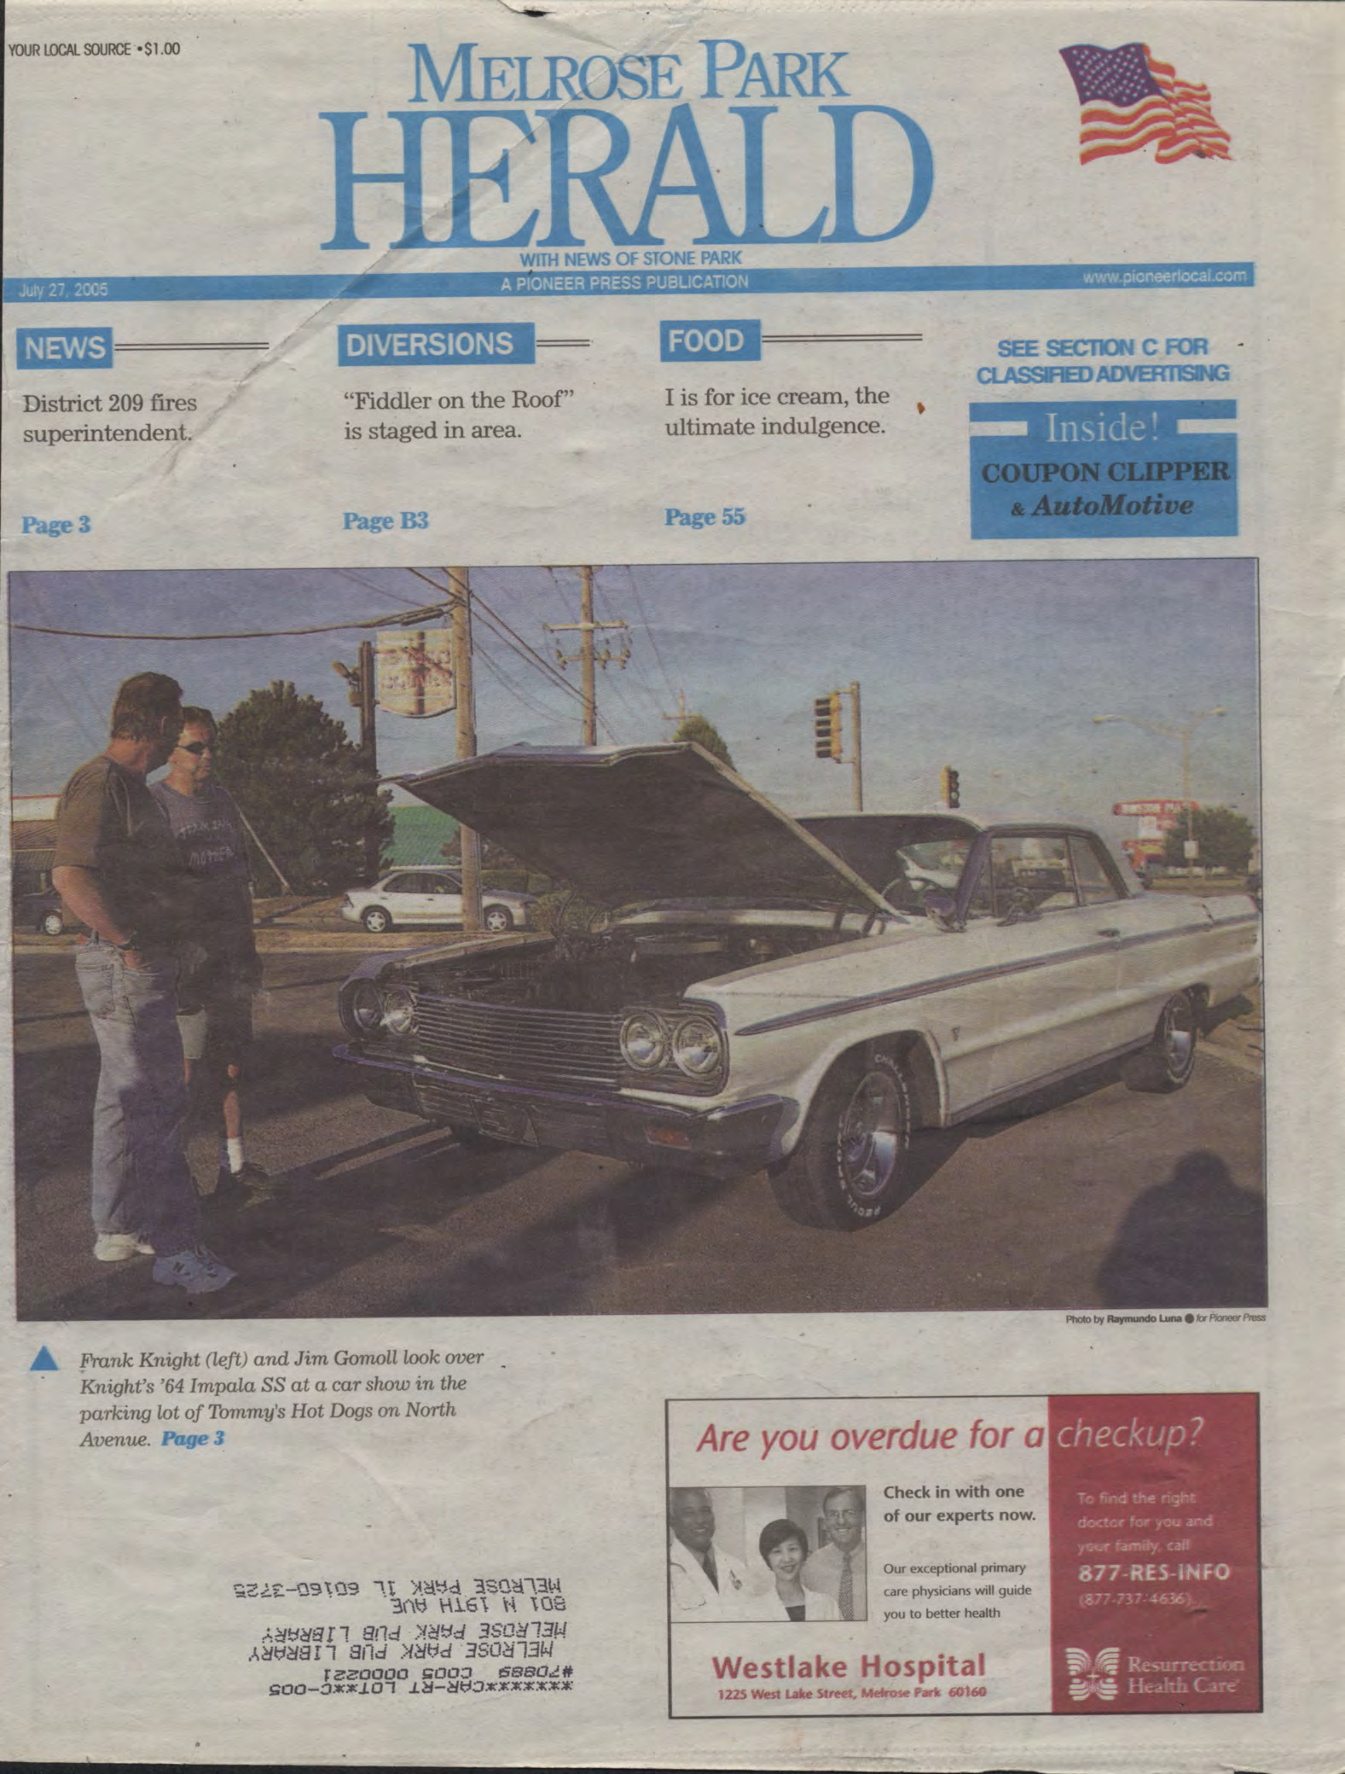 The Herald – 20050727